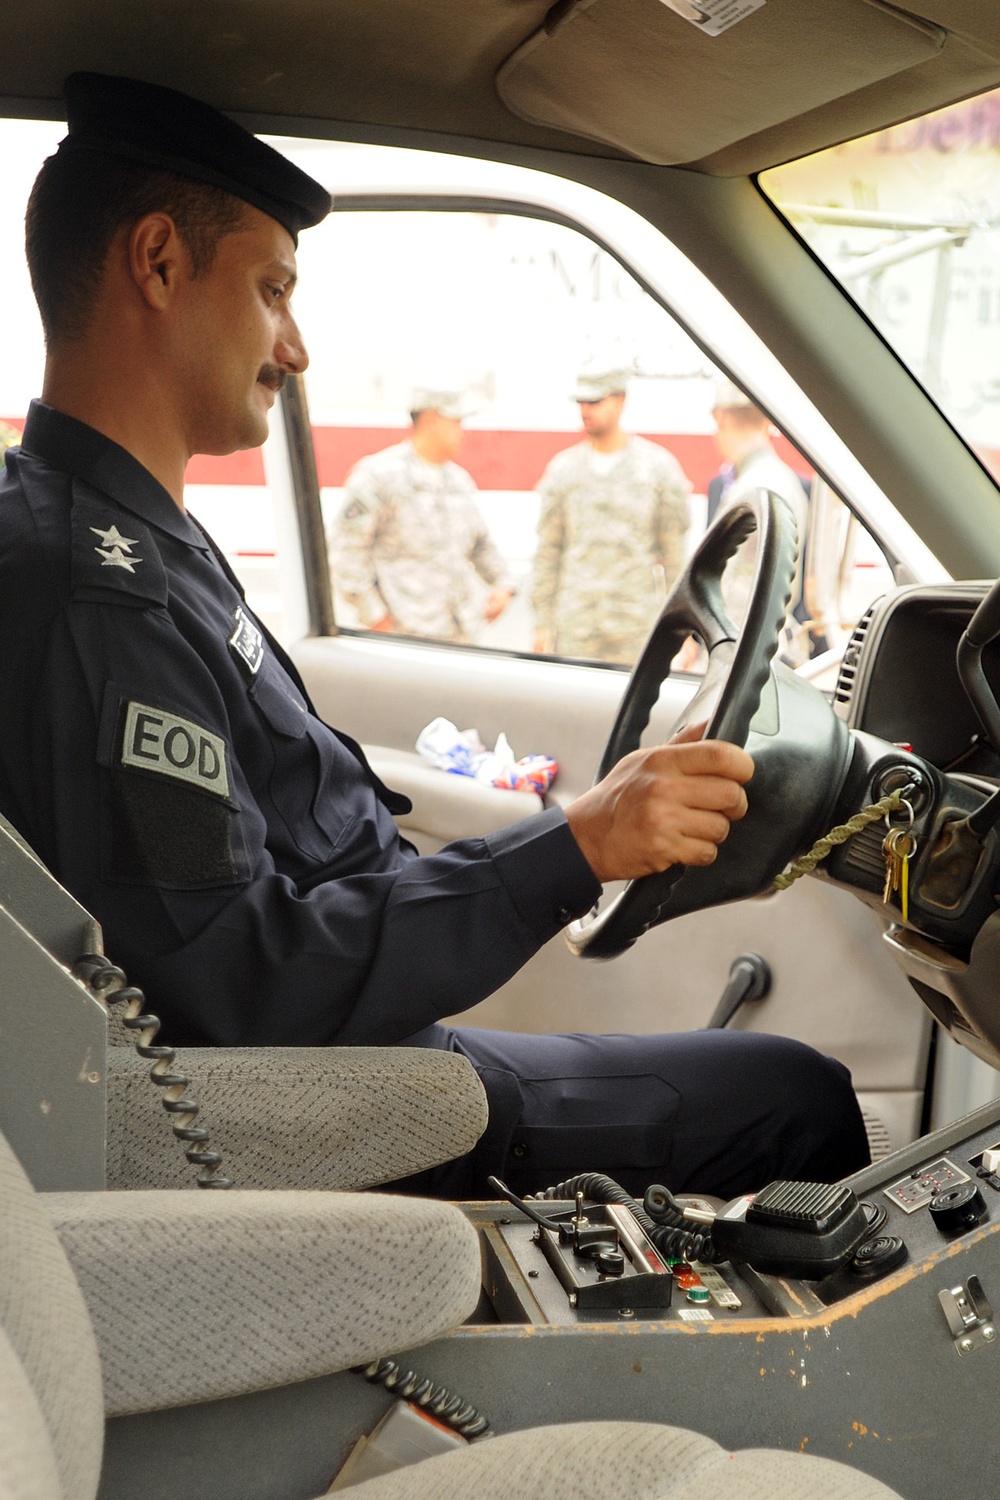 Iraqi Fire Academy receives first ambulance